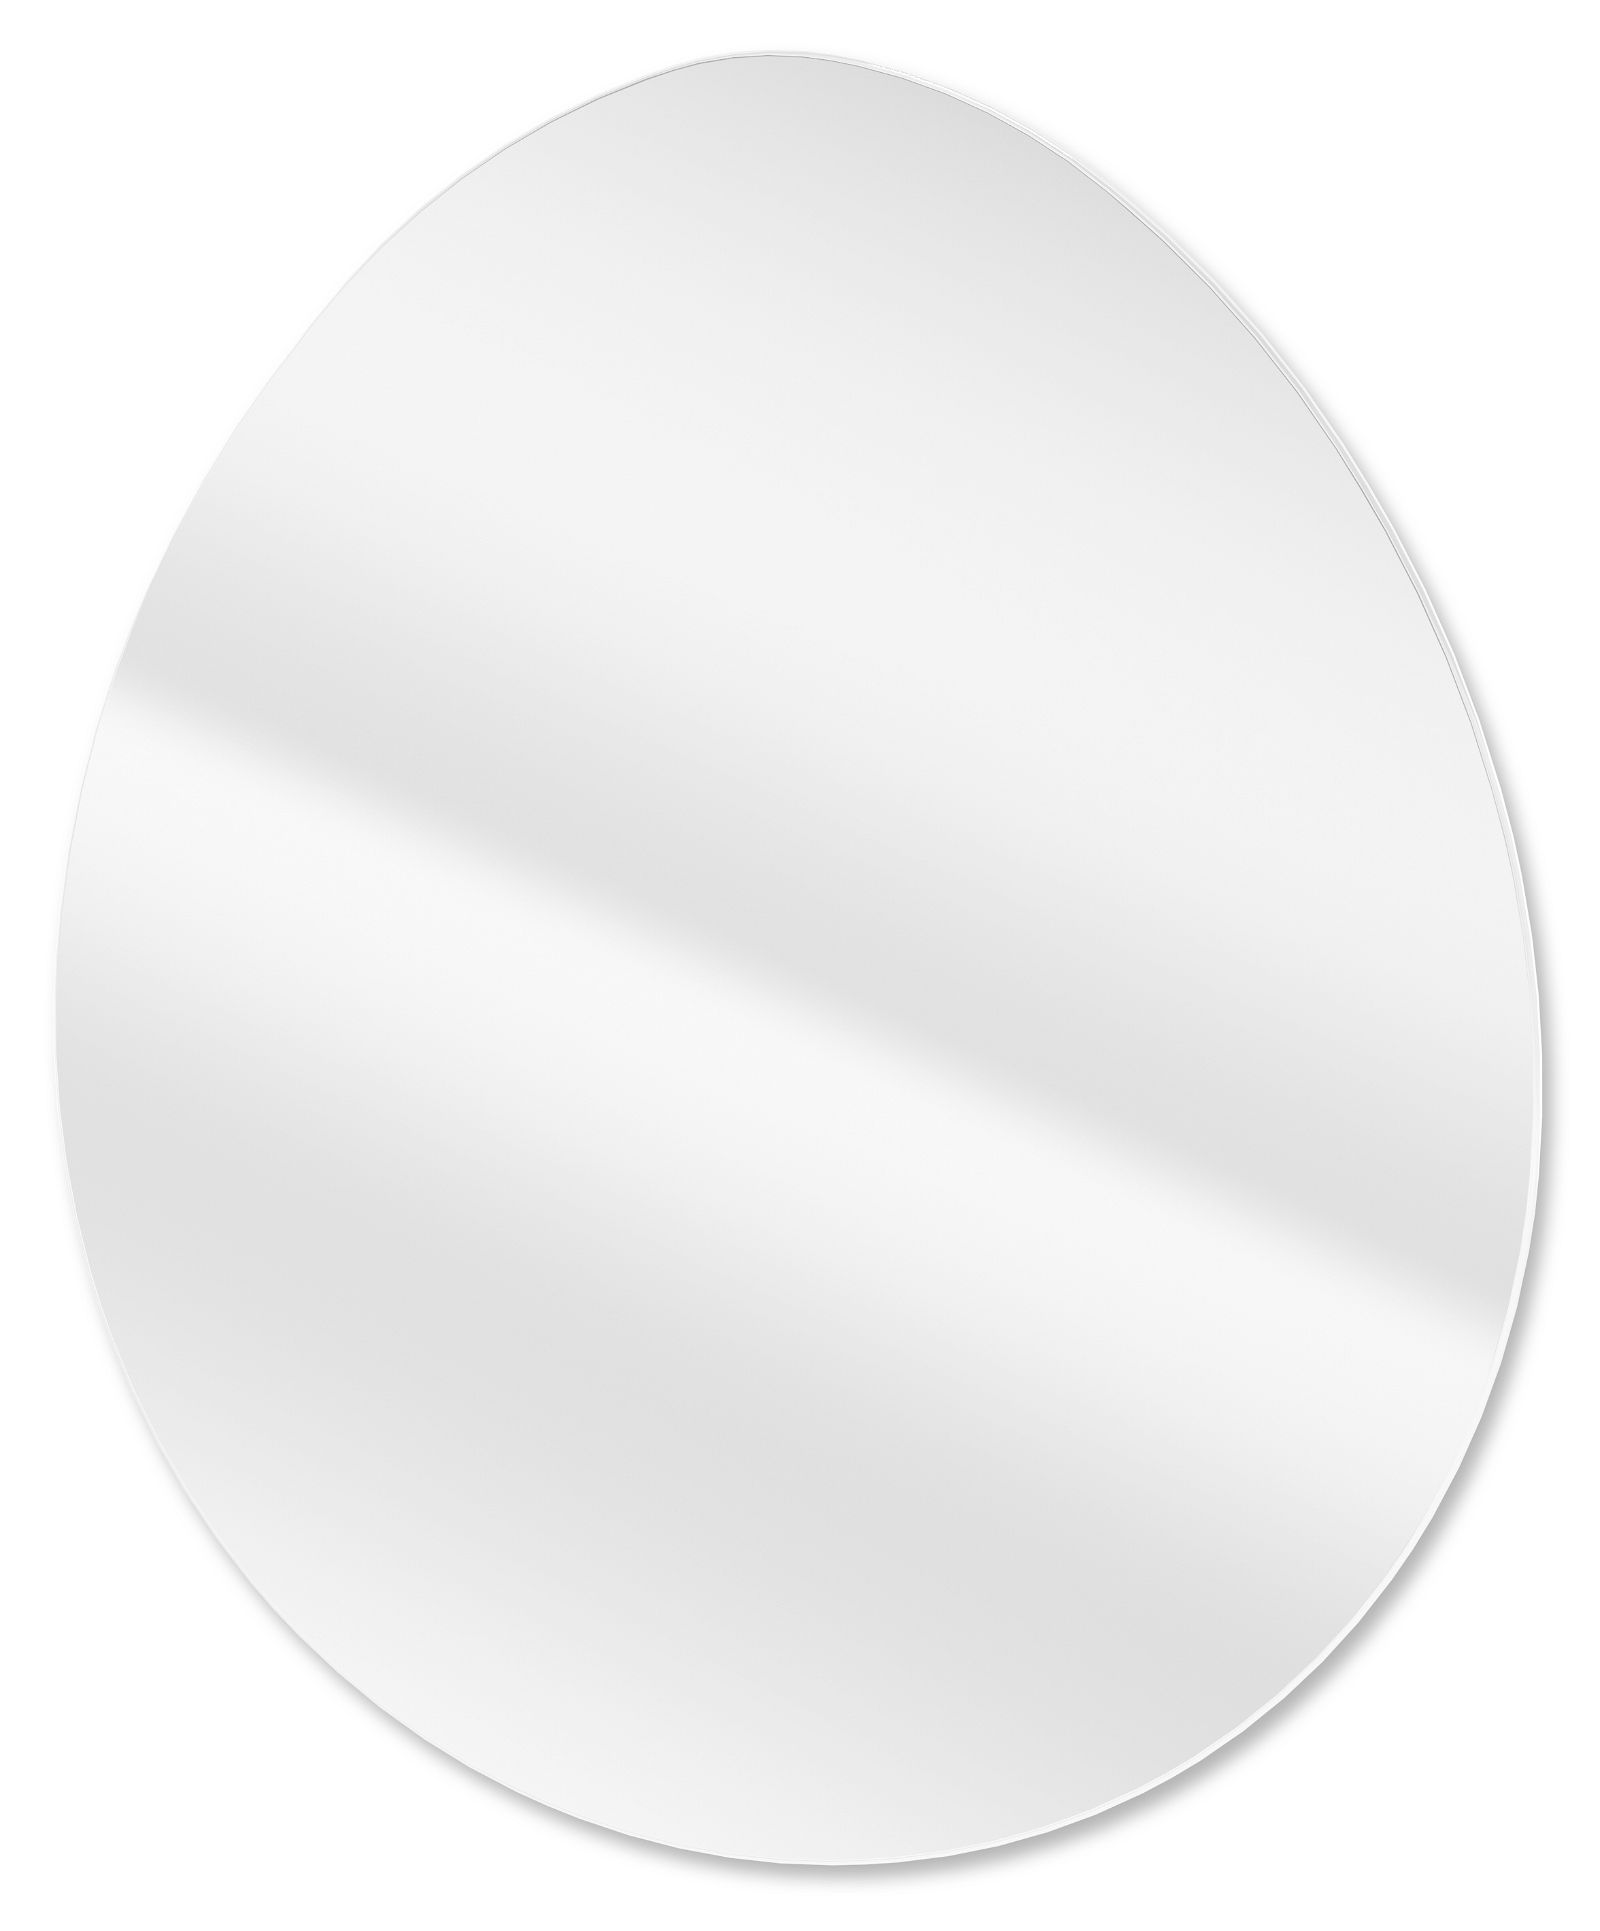 Ogledalo, viseč - asimetričen - ADI_E841 - Główne zdjęcie produktowe